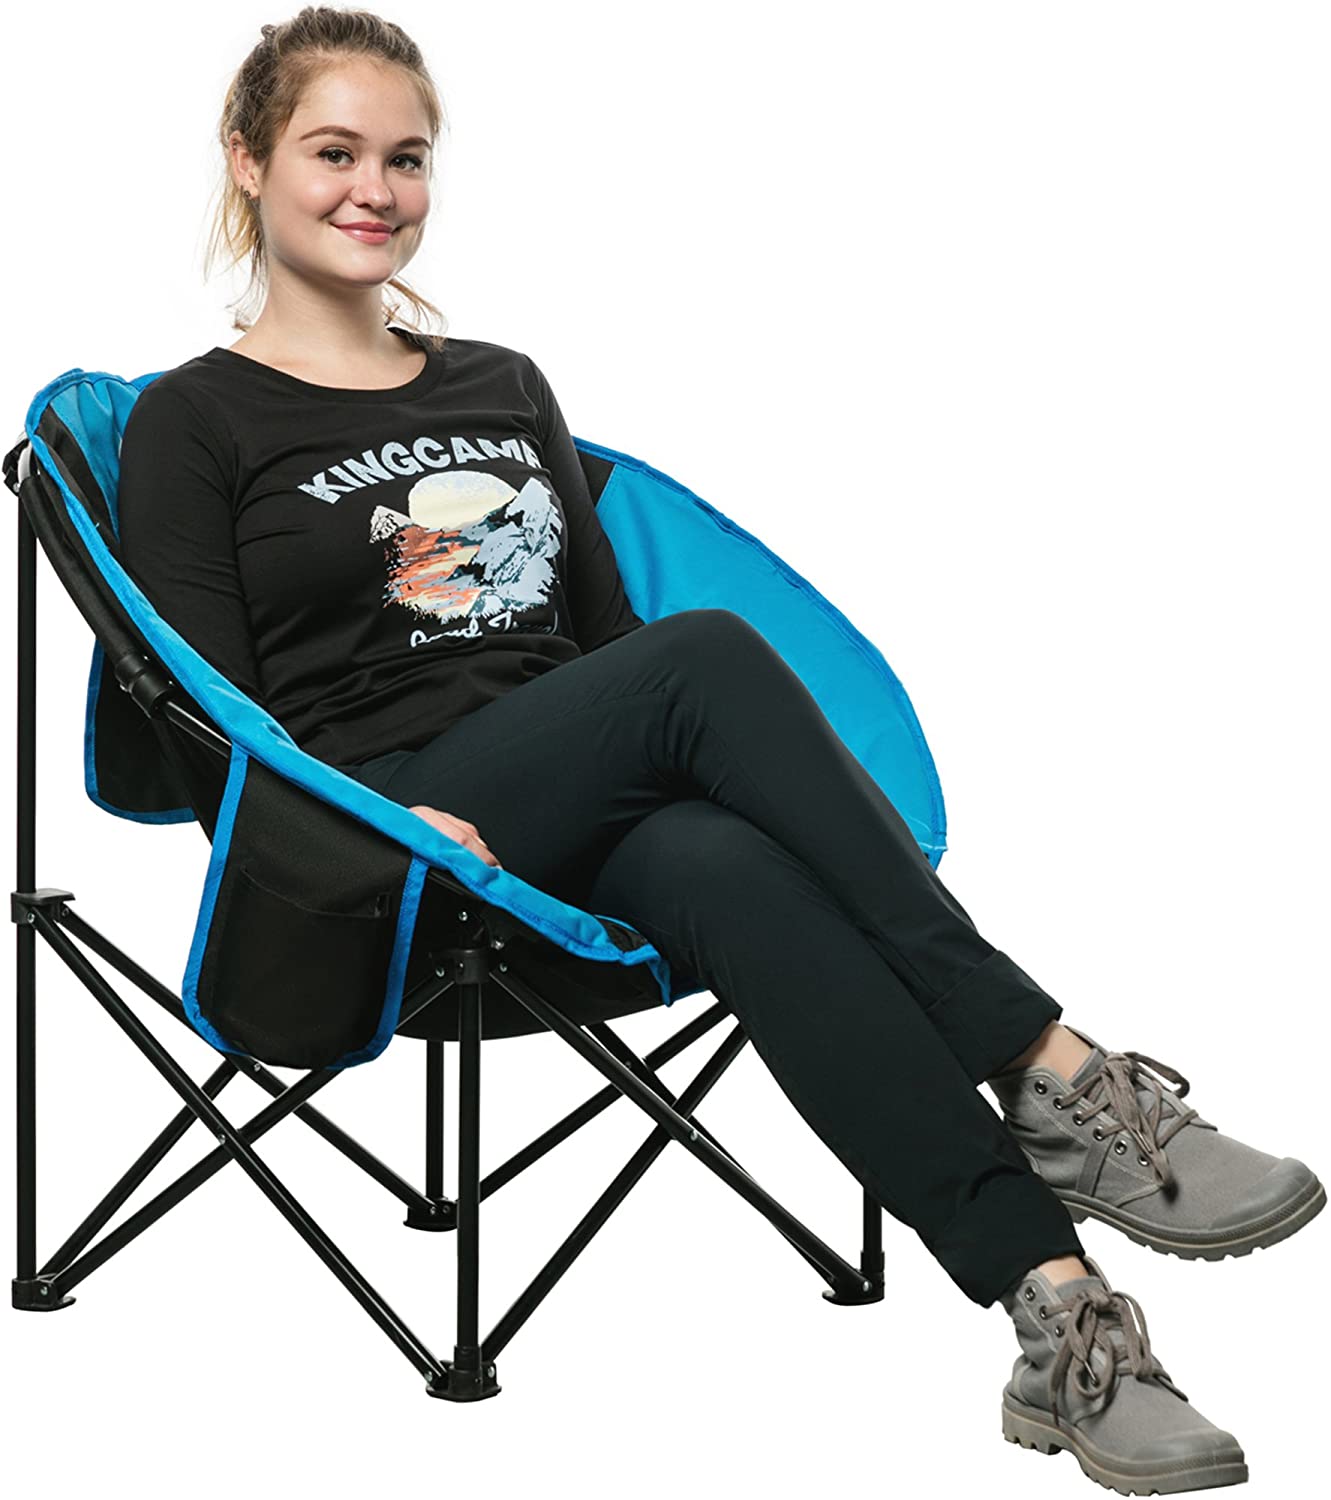 Кресло складное kingcamp moon leisure chair 3816